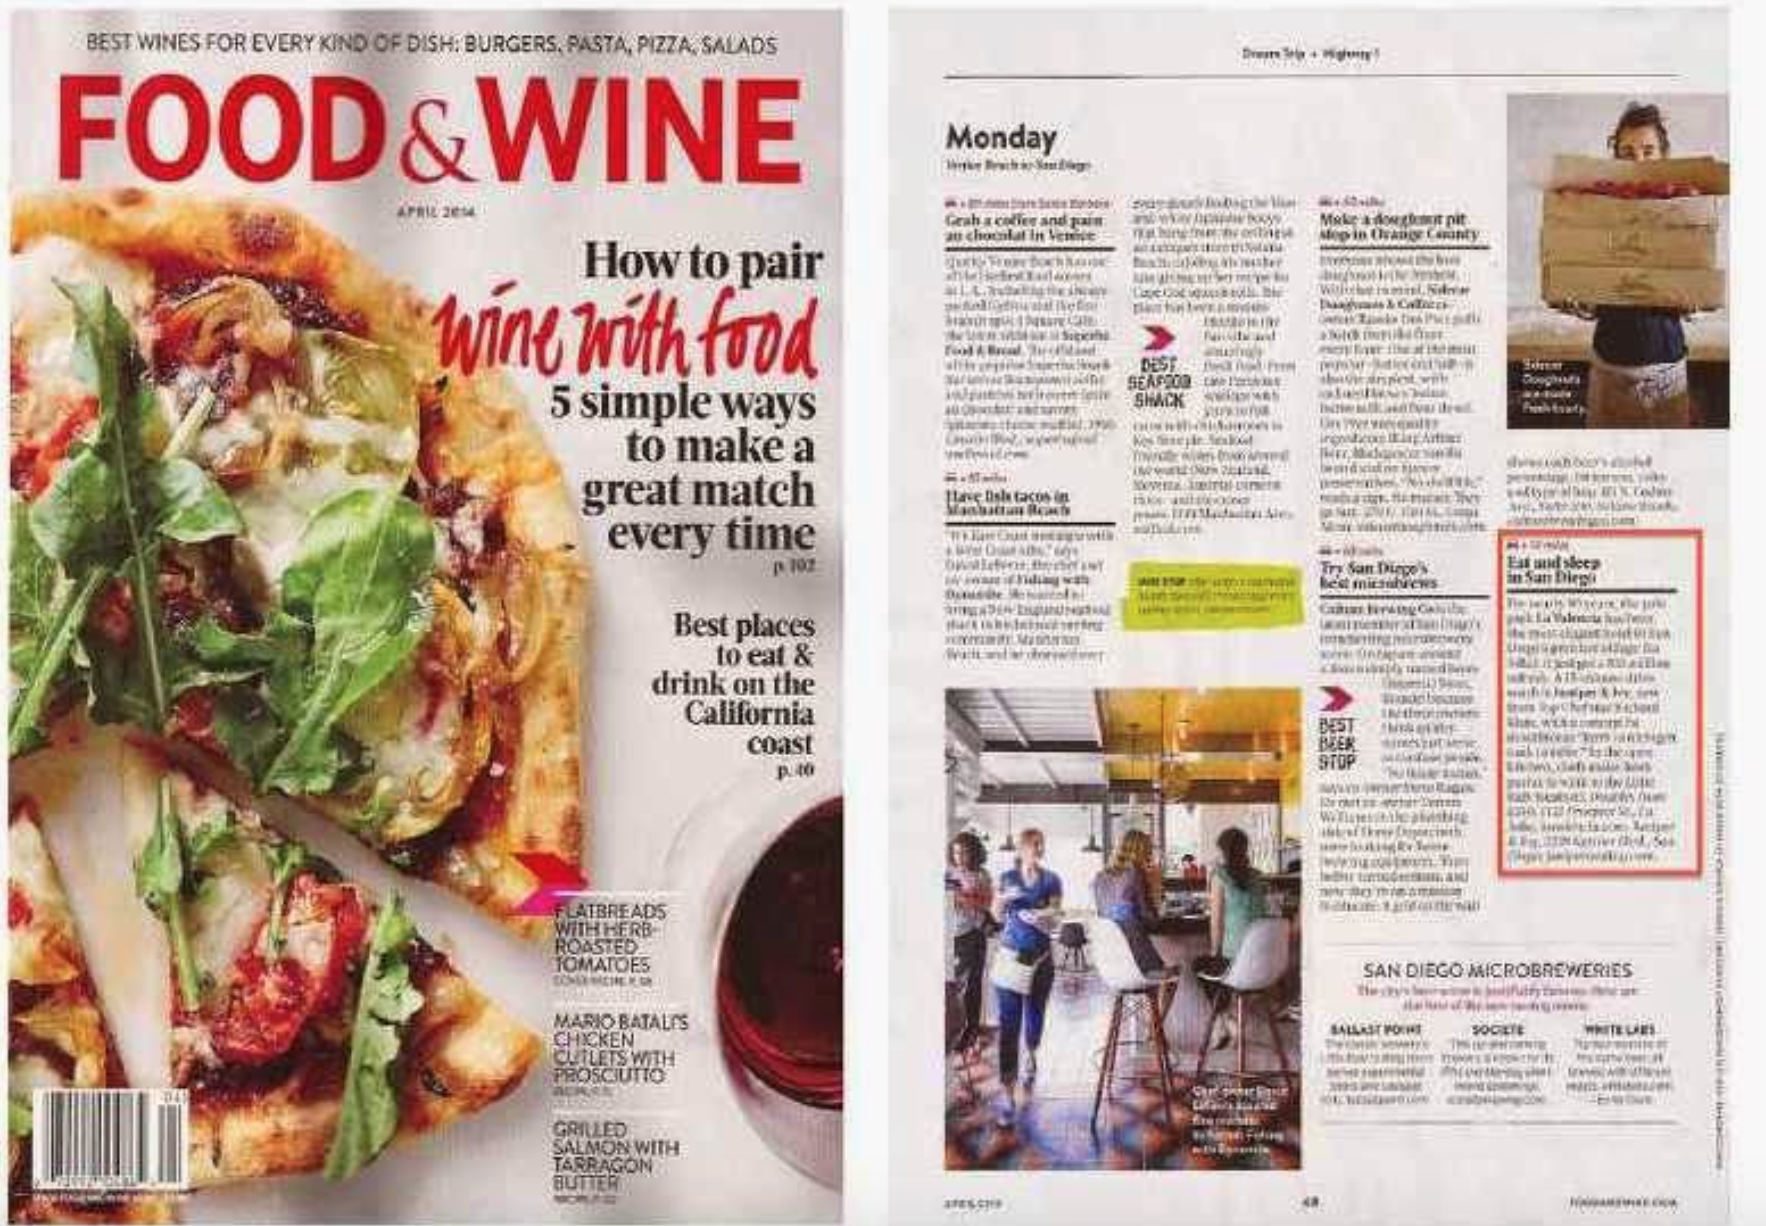 Food & Wine magazine cover